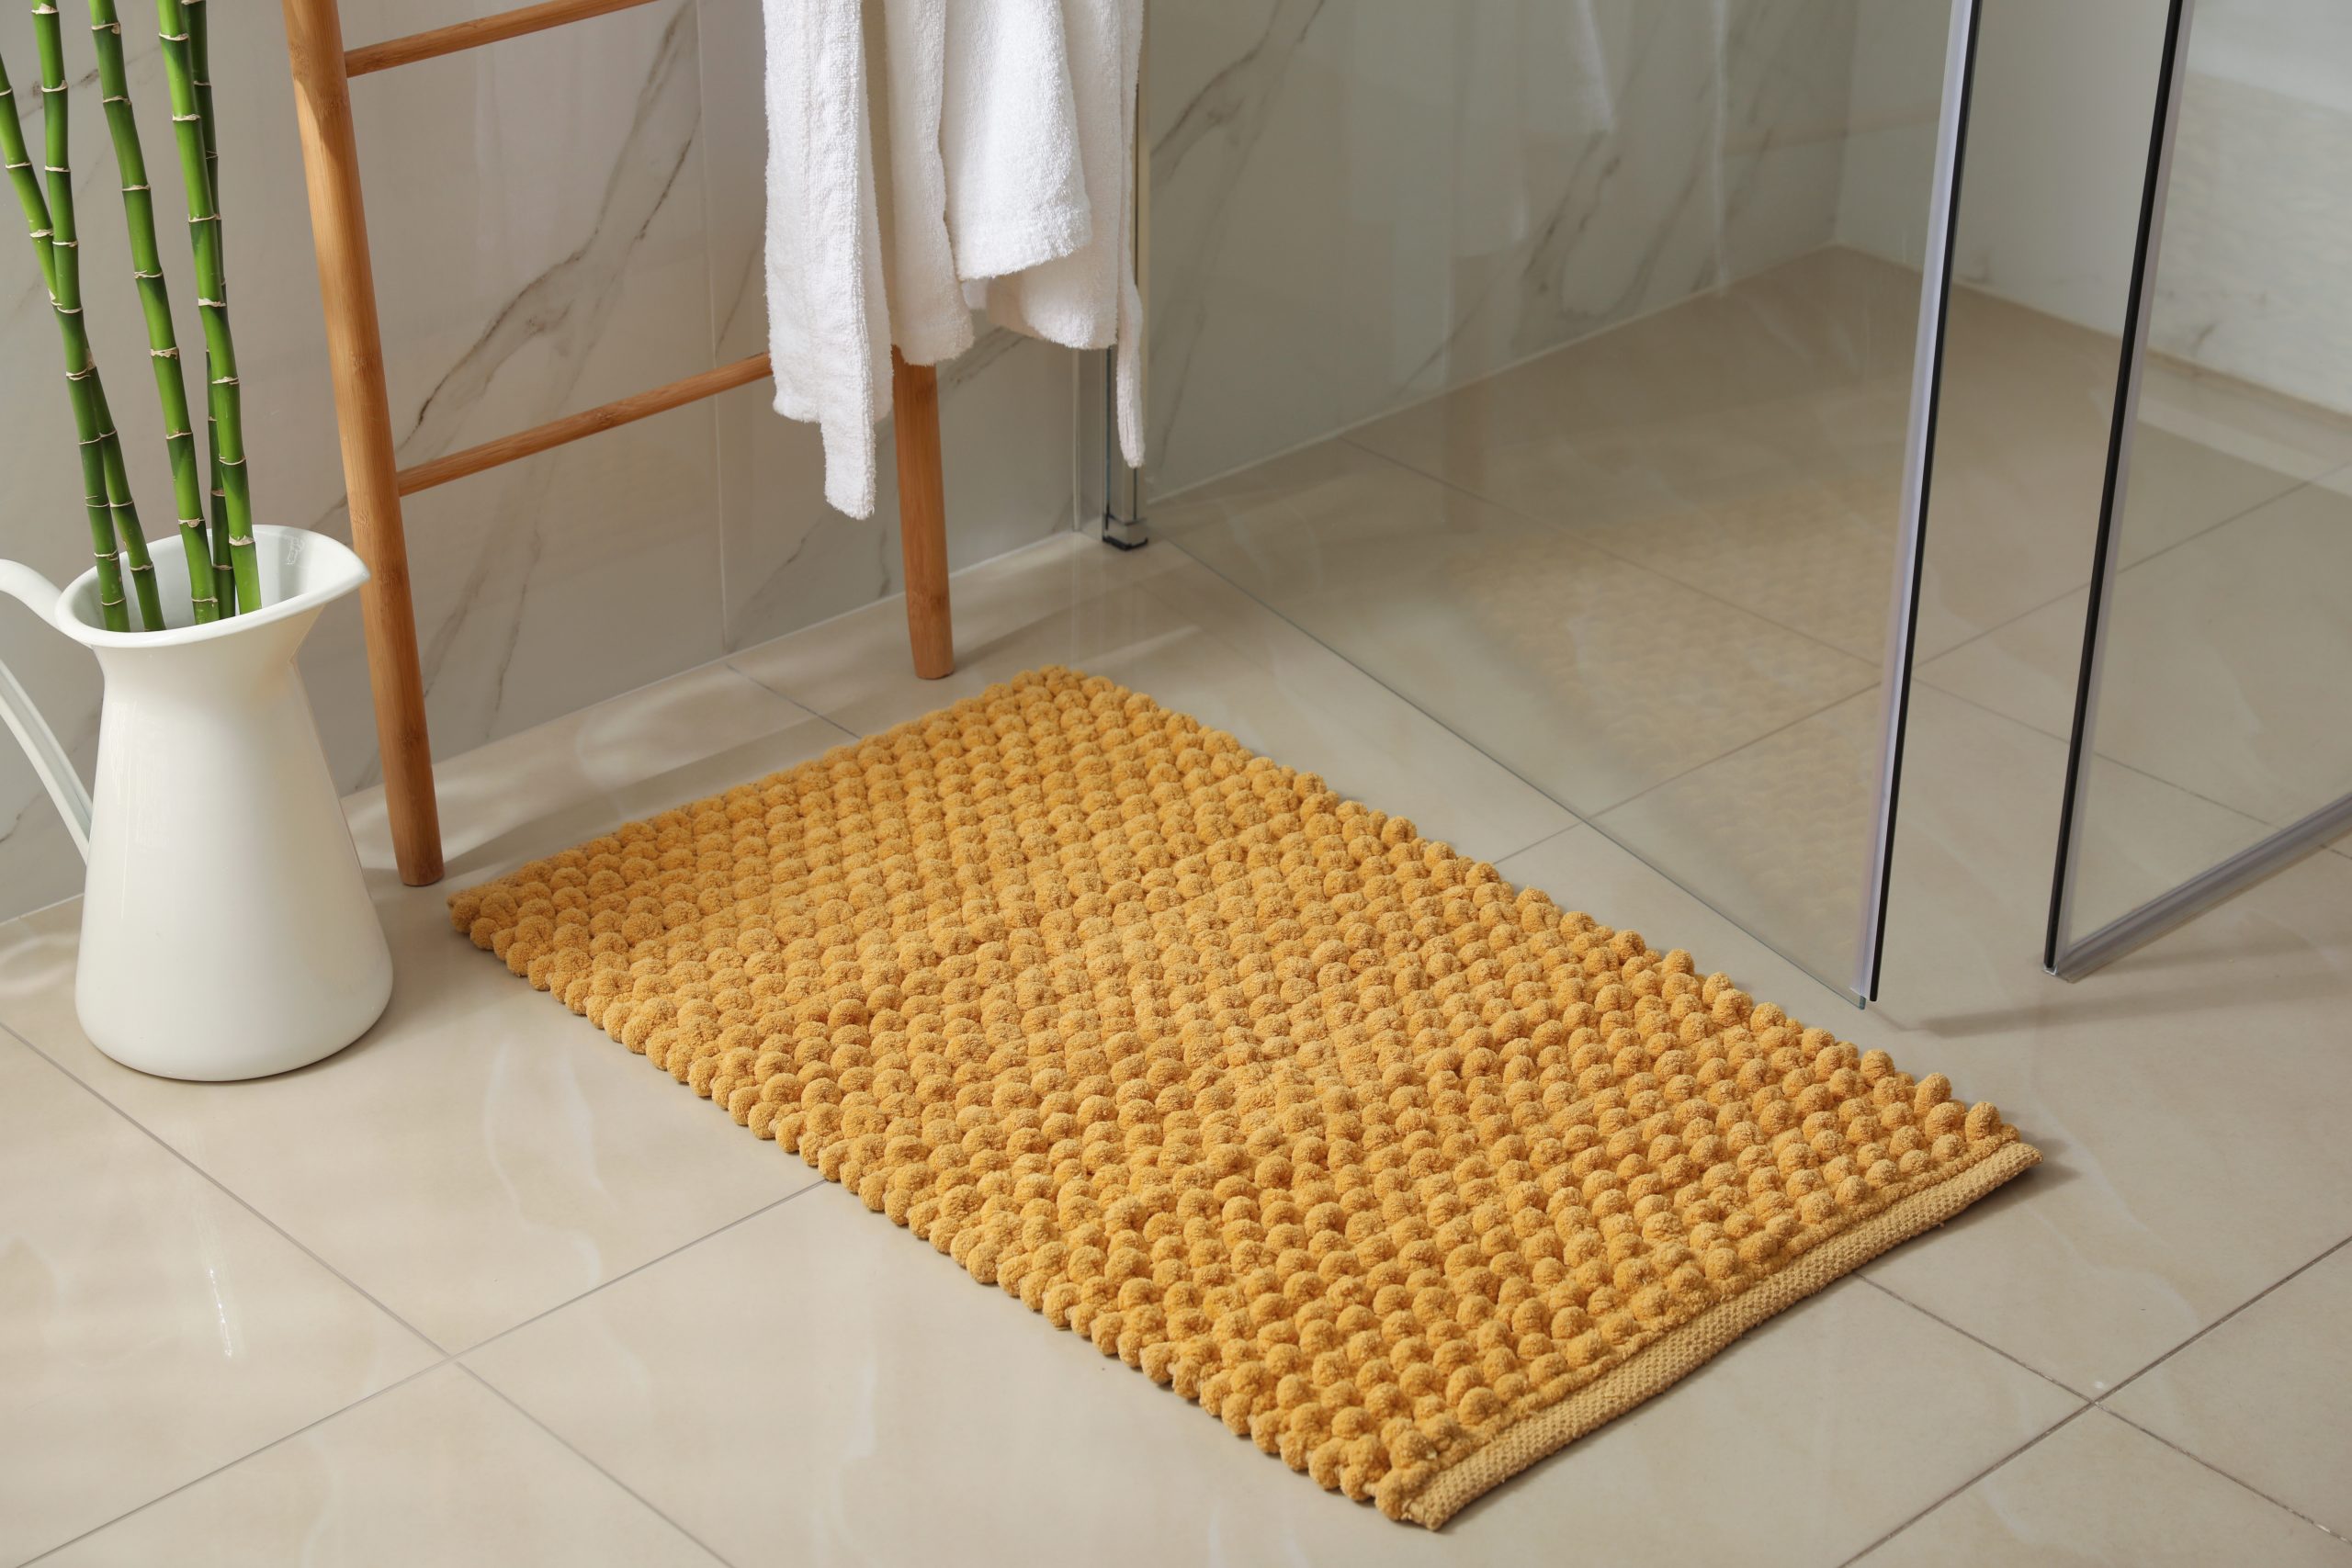 New Bathroom Non Slip Mat Large Bathroom Bath Mat Shower Room Bathtub Foot Mat  Bathroom Water Proof Mat Environmental Protection